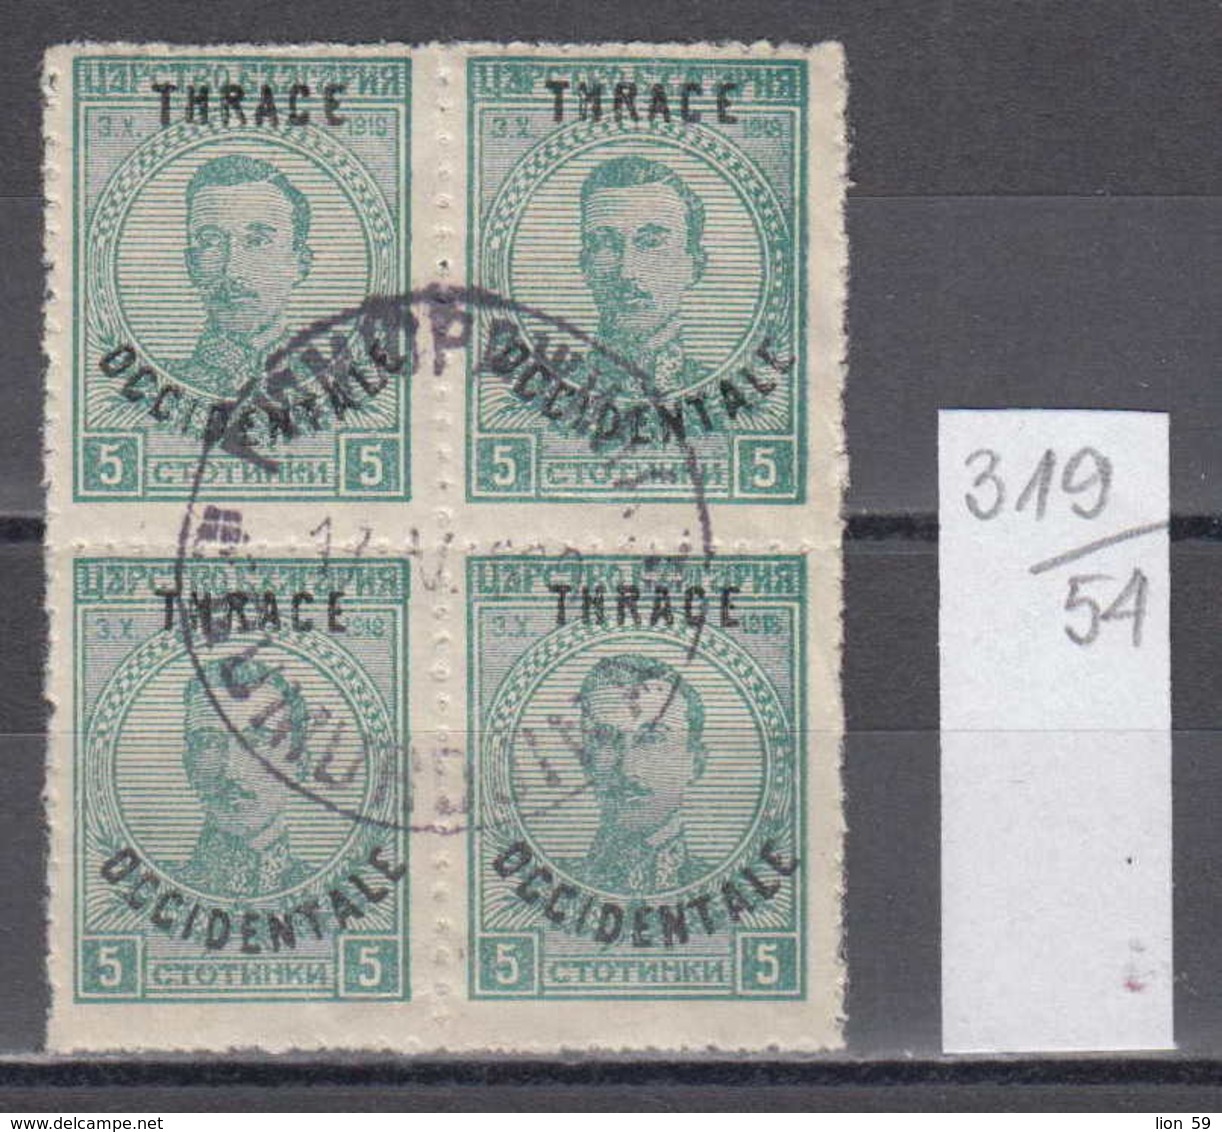 54K319 / Thrace Thrakien Trakia 1920 Michel Nr. 20 Overprint Bulgaria "TRACE OCCIDENTALE" Used GUMURDJINA Greece Grece - Thrakien